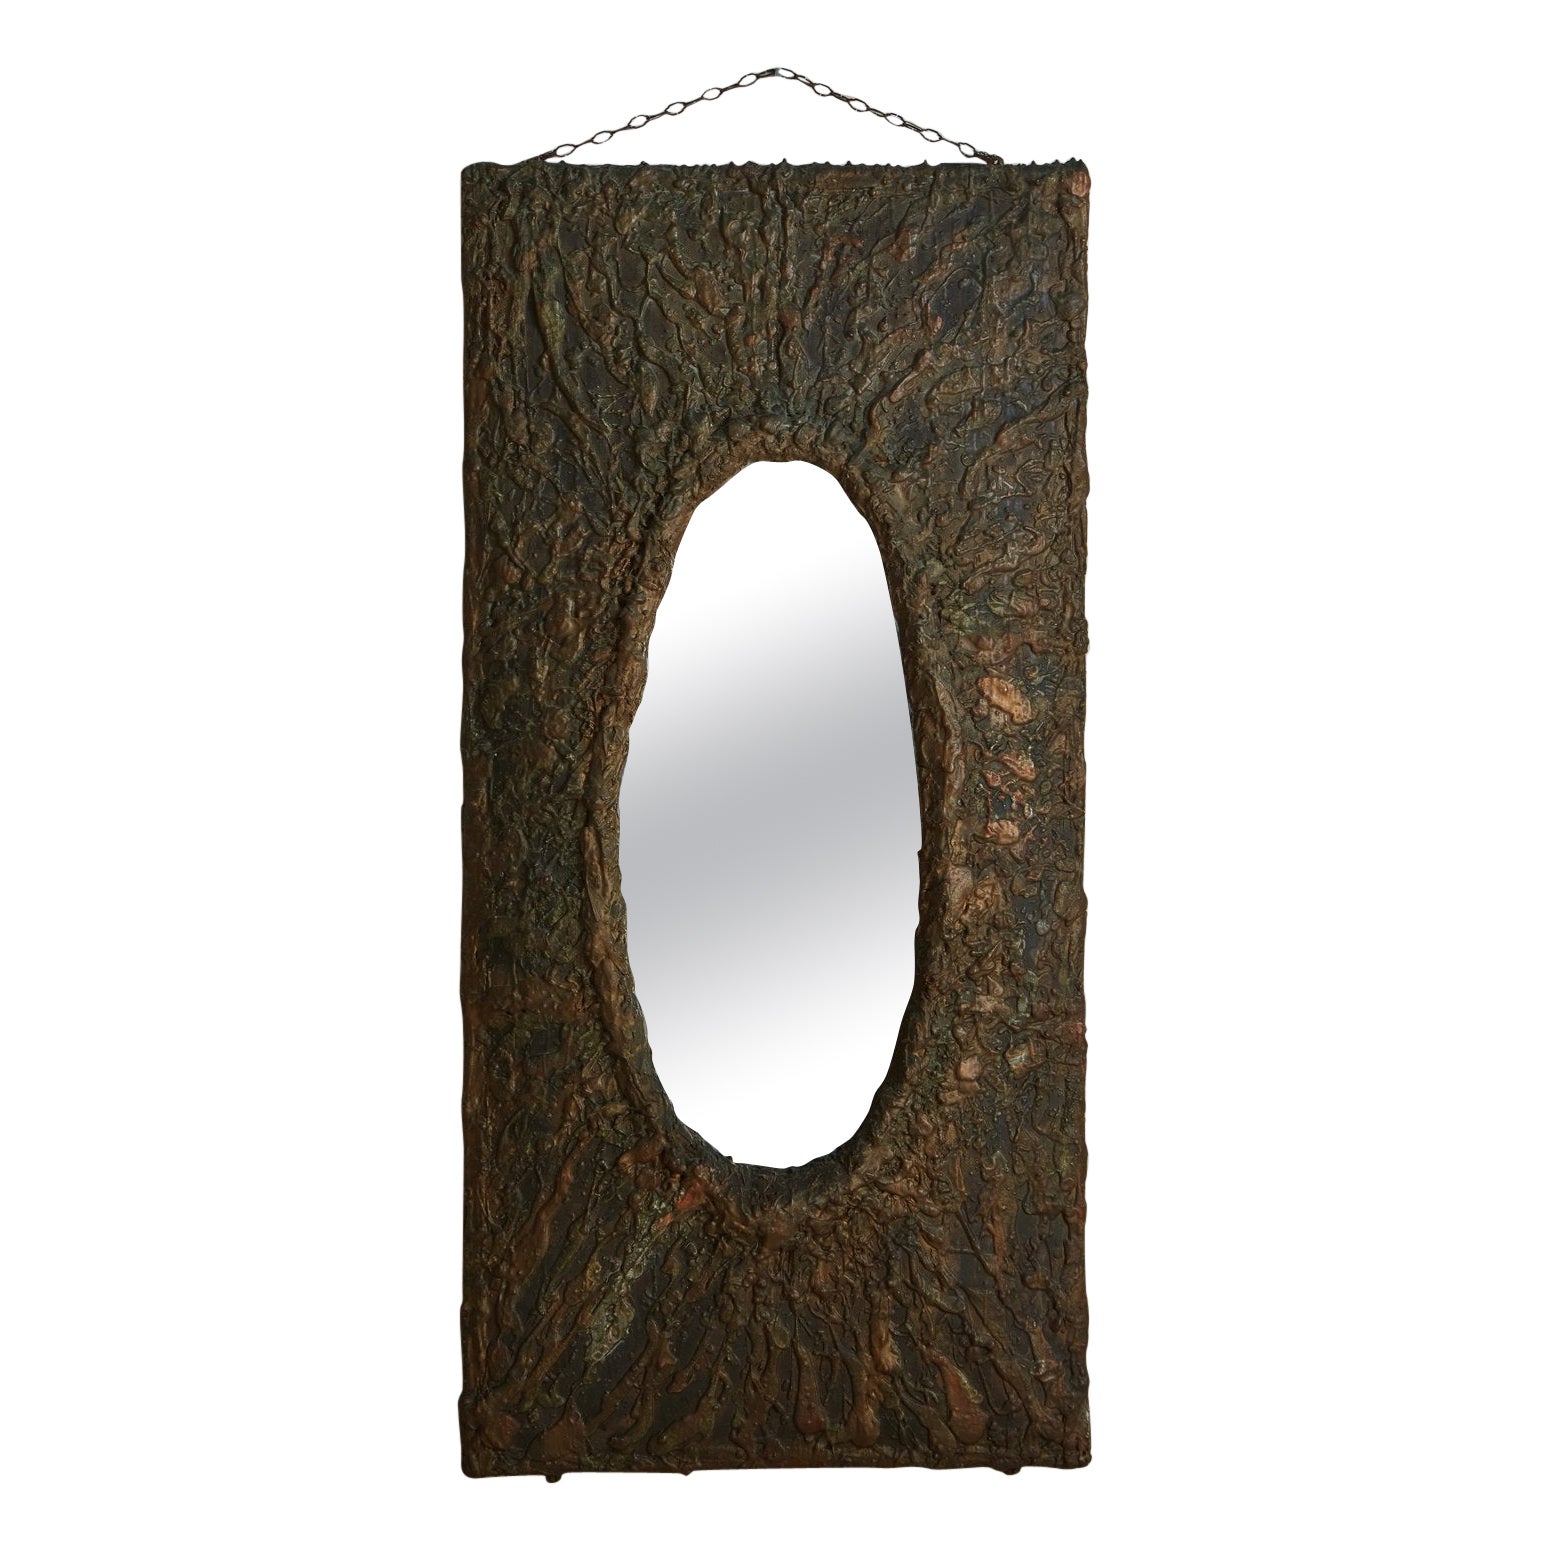 Monumental Brutalist Copper + Resin Framed Mirror, Italy, 1980s For Sale